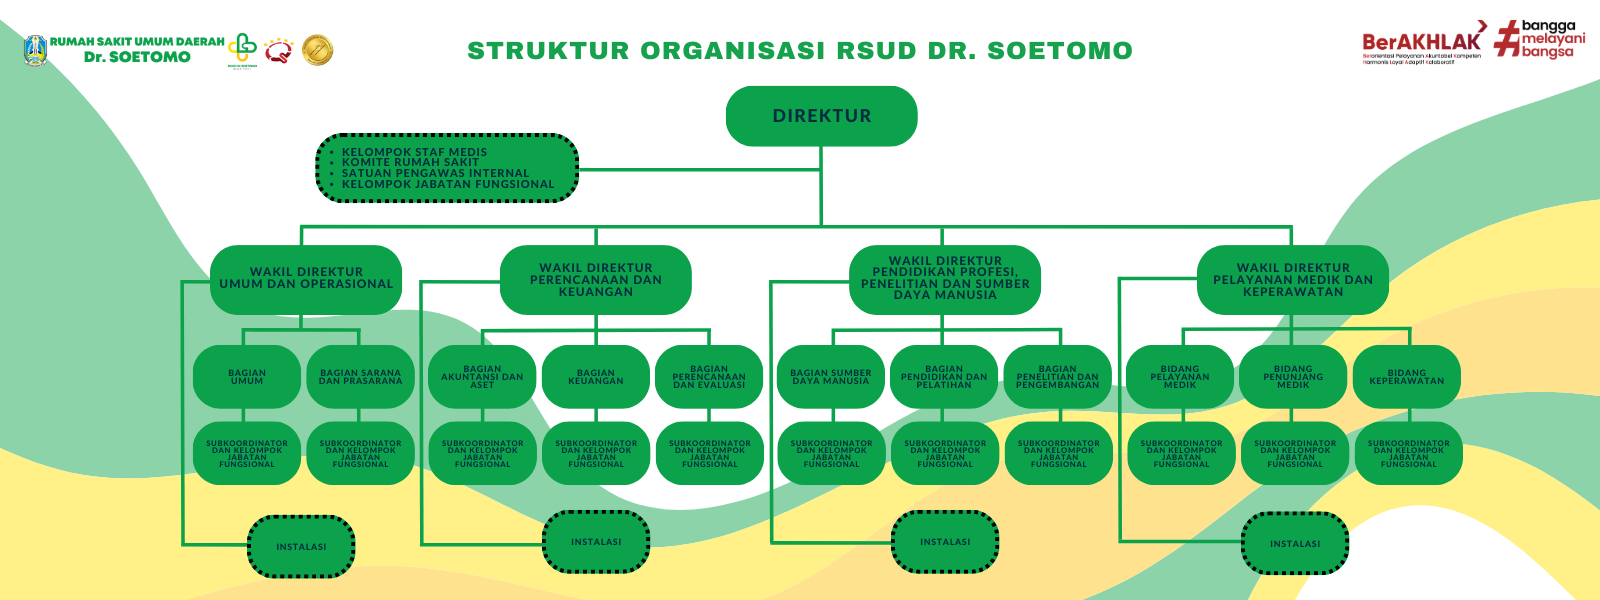 Struktur Organisasi RSUD Dr. Soetomo